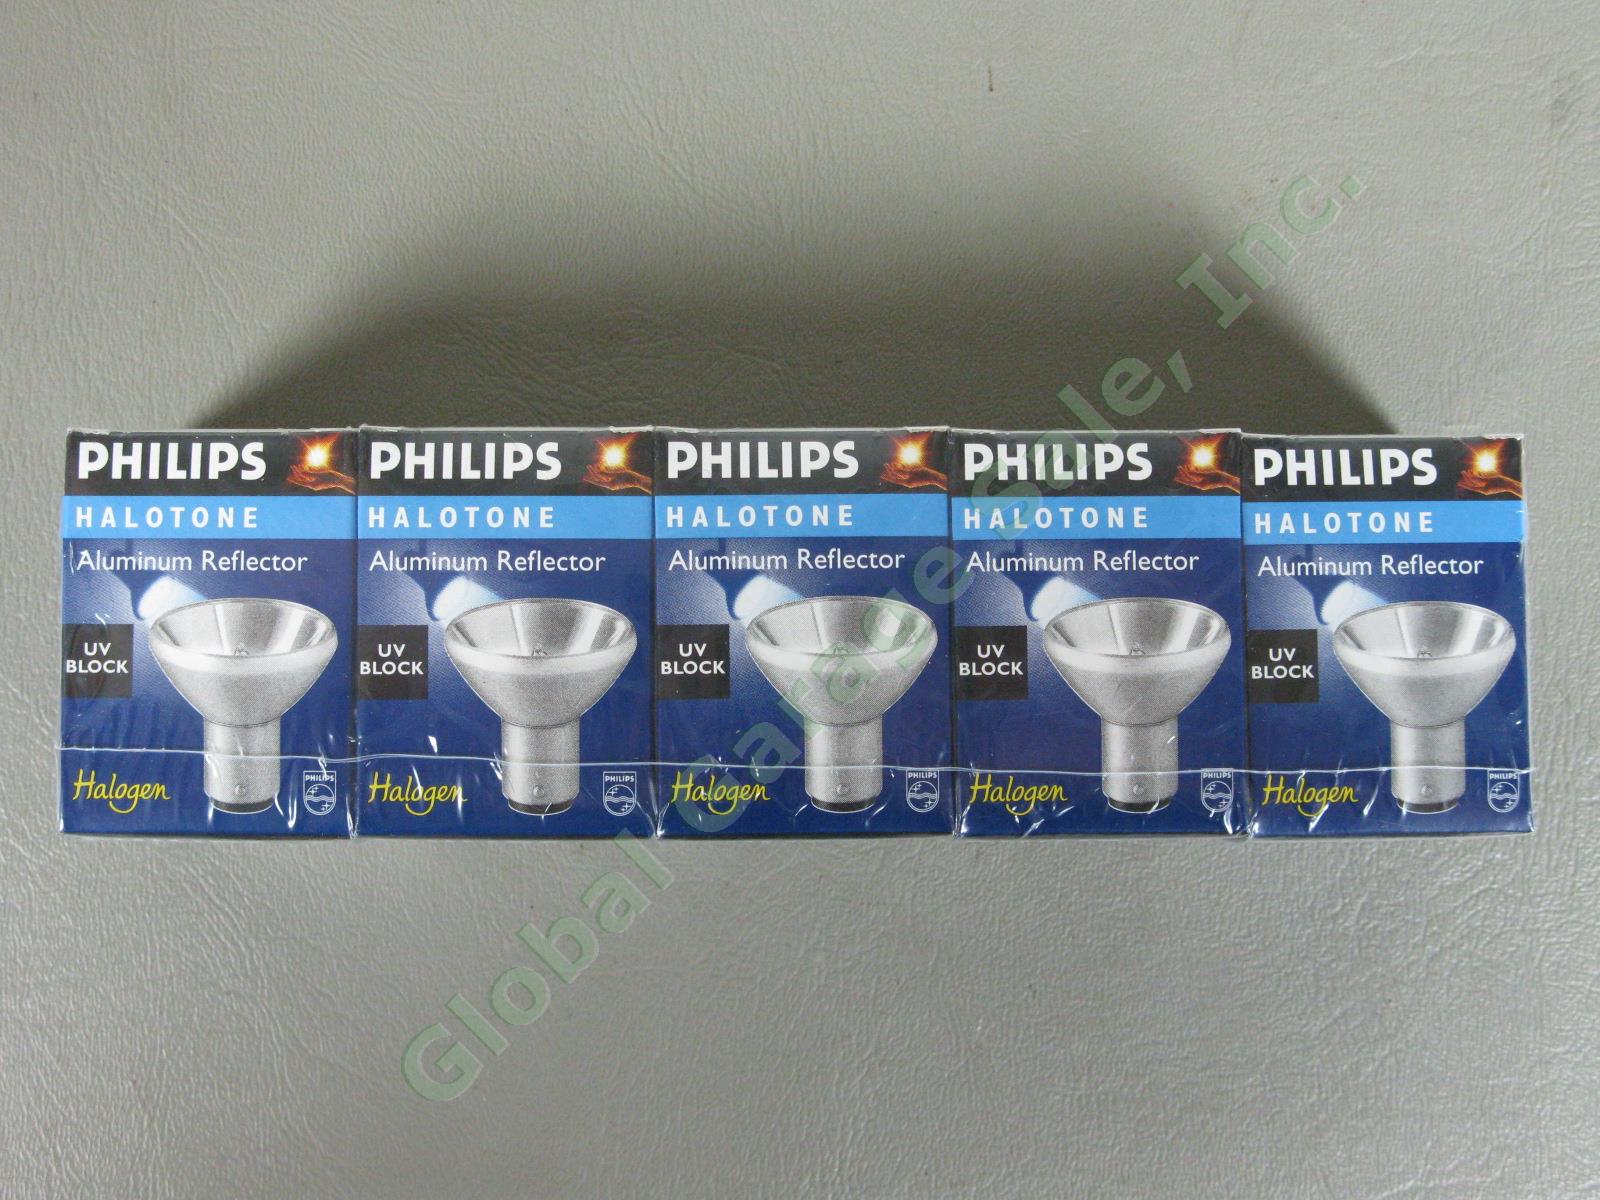 50 NEW Philips Halotone Light Bulb Lot 20w 12v UV Block 6434/FR Frosted 18° NR 1